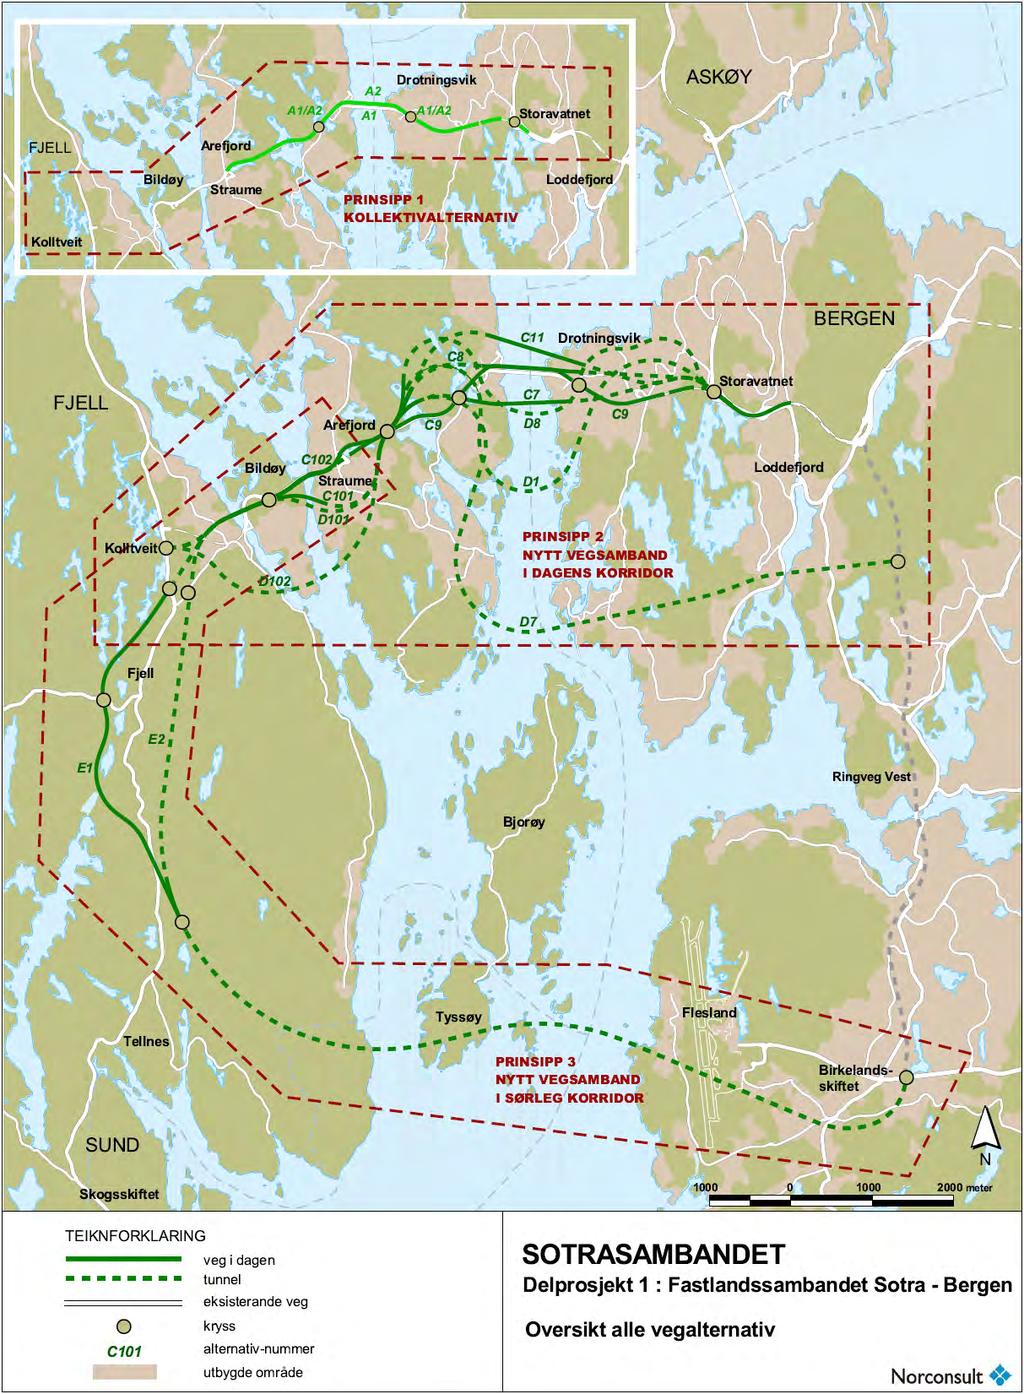 Delprosjekt 1; Fastlandssambandet Sotra - Bergen Alternativ Alternativa er delt i tre prinsipp: Prinsipp 1, kollektivprioritering langs dagens veg utan auke i vegkapasiteten